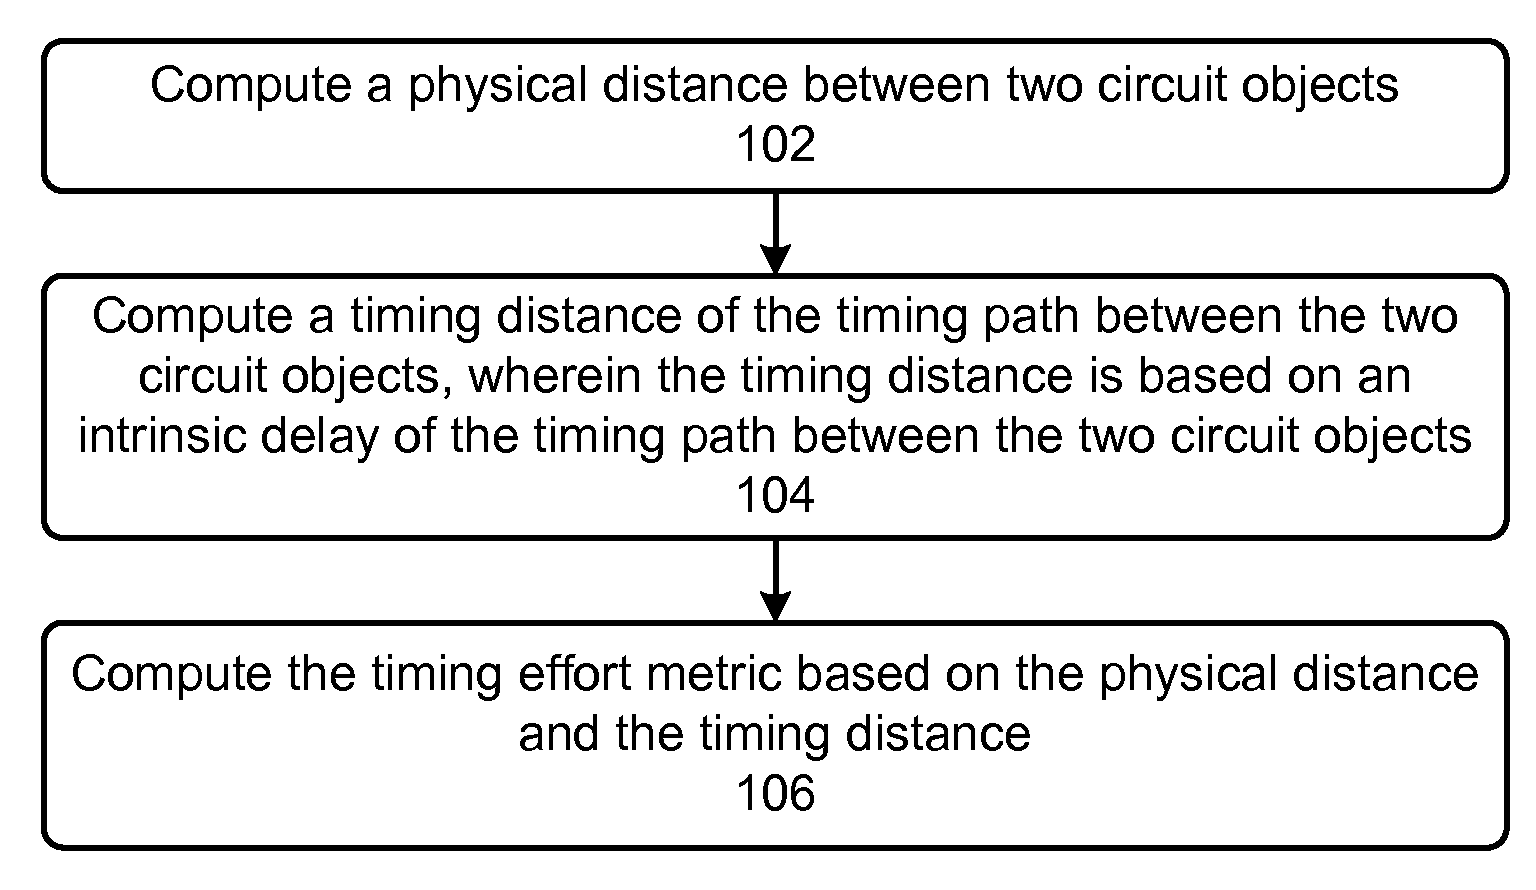 Path-based floorplan analysis